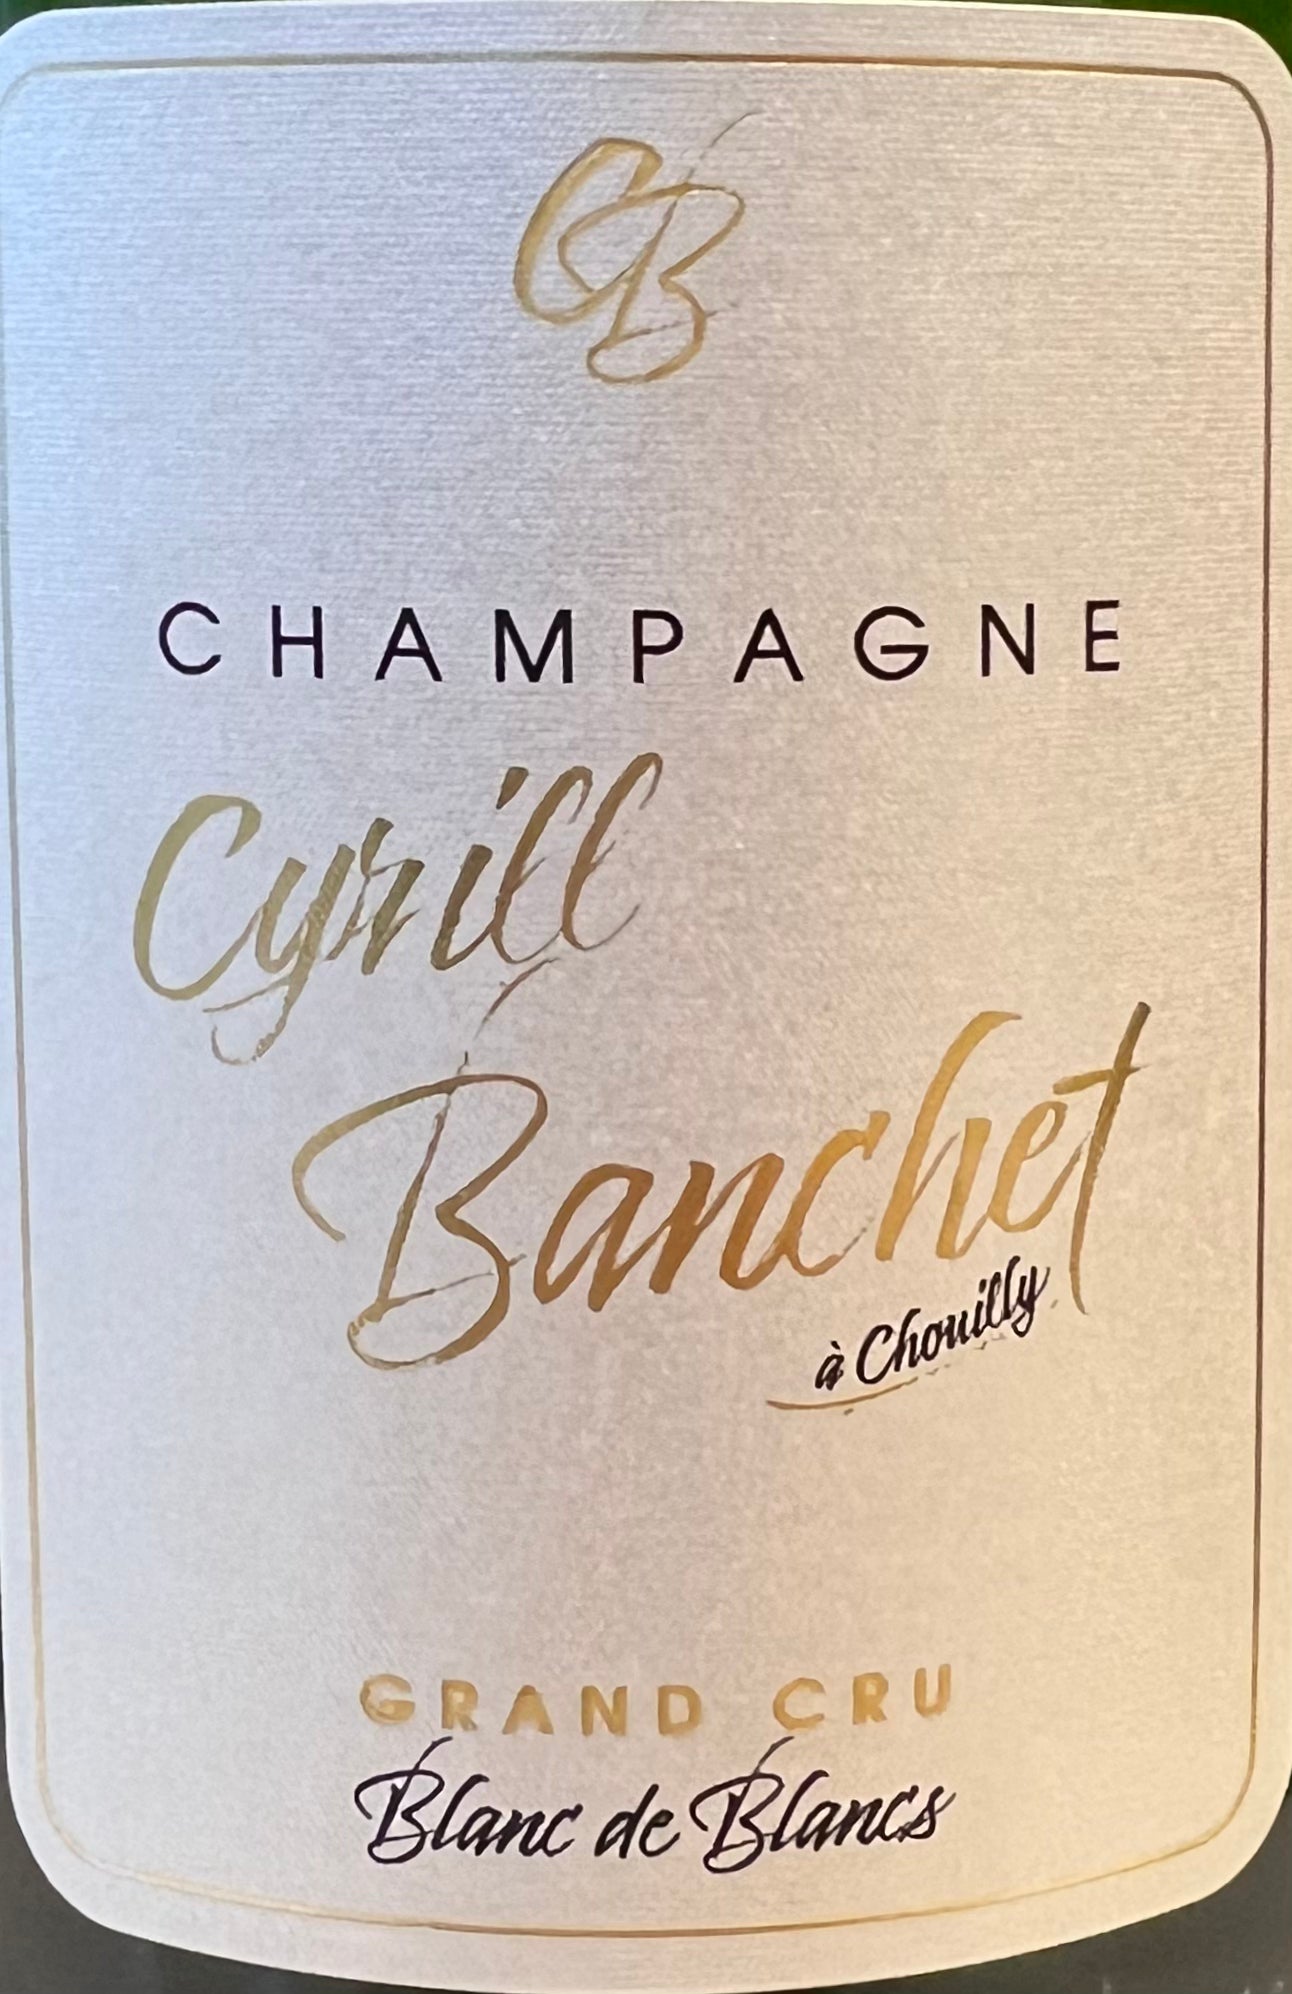 Cyrill Banchet Grand Cru - Blanc de Blancs - Champagne